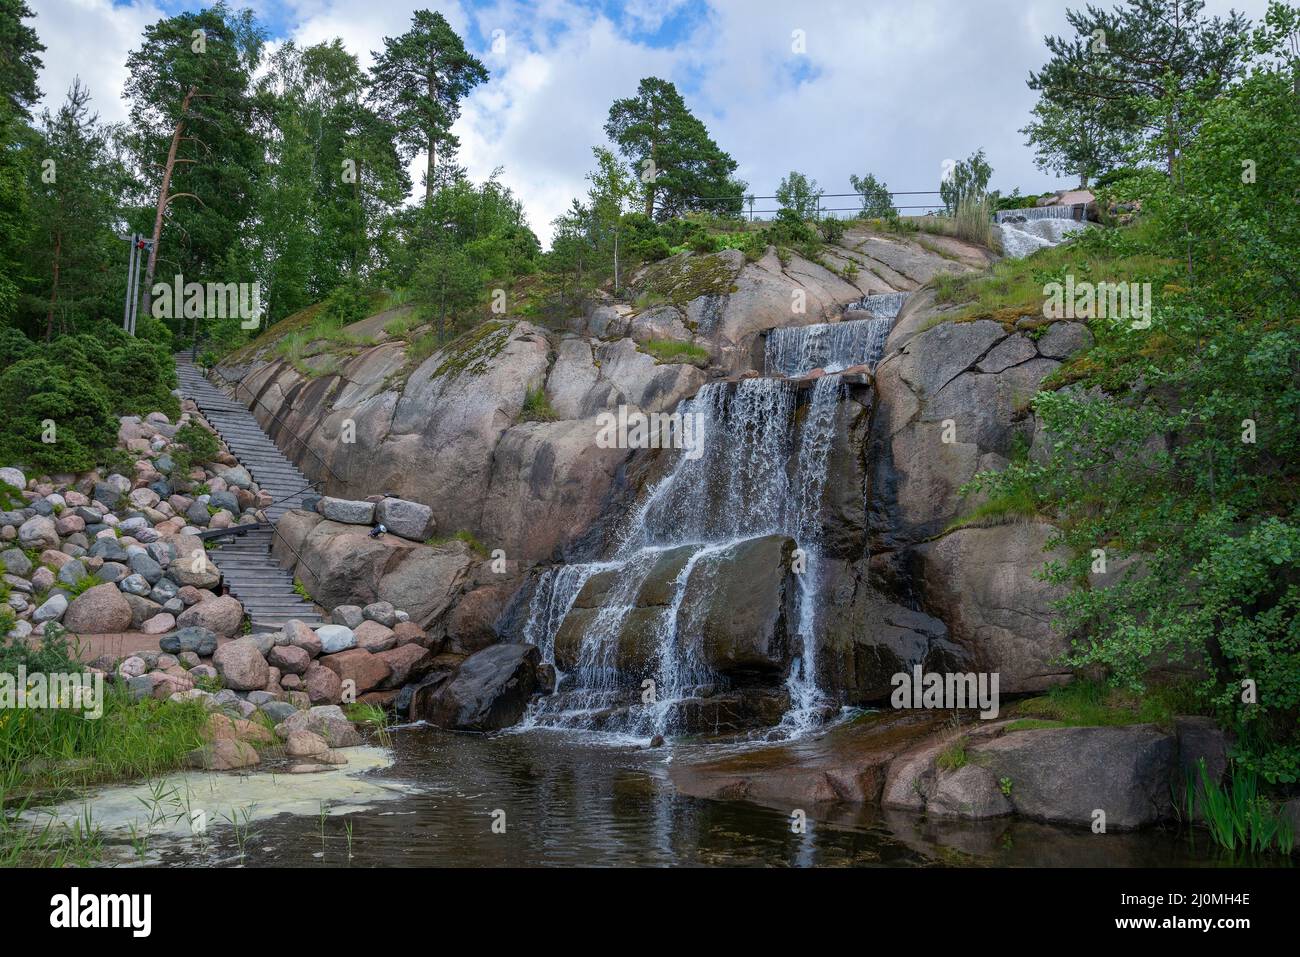 Putouskallio rock with waterfall in Sapocca Park. Kotka, Finland Stock Photo